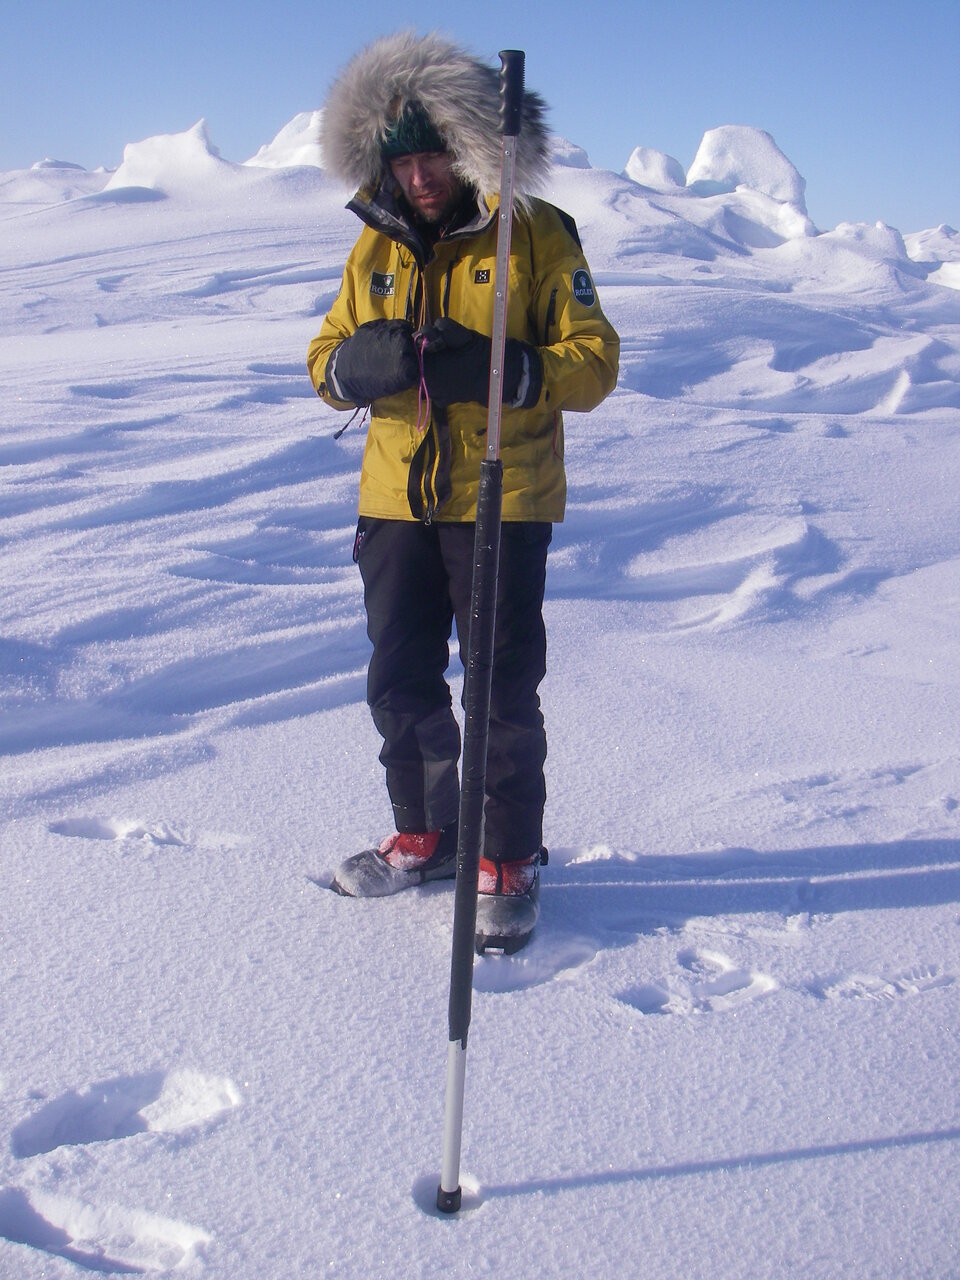 Taking snow-depth measurements for CryoSat